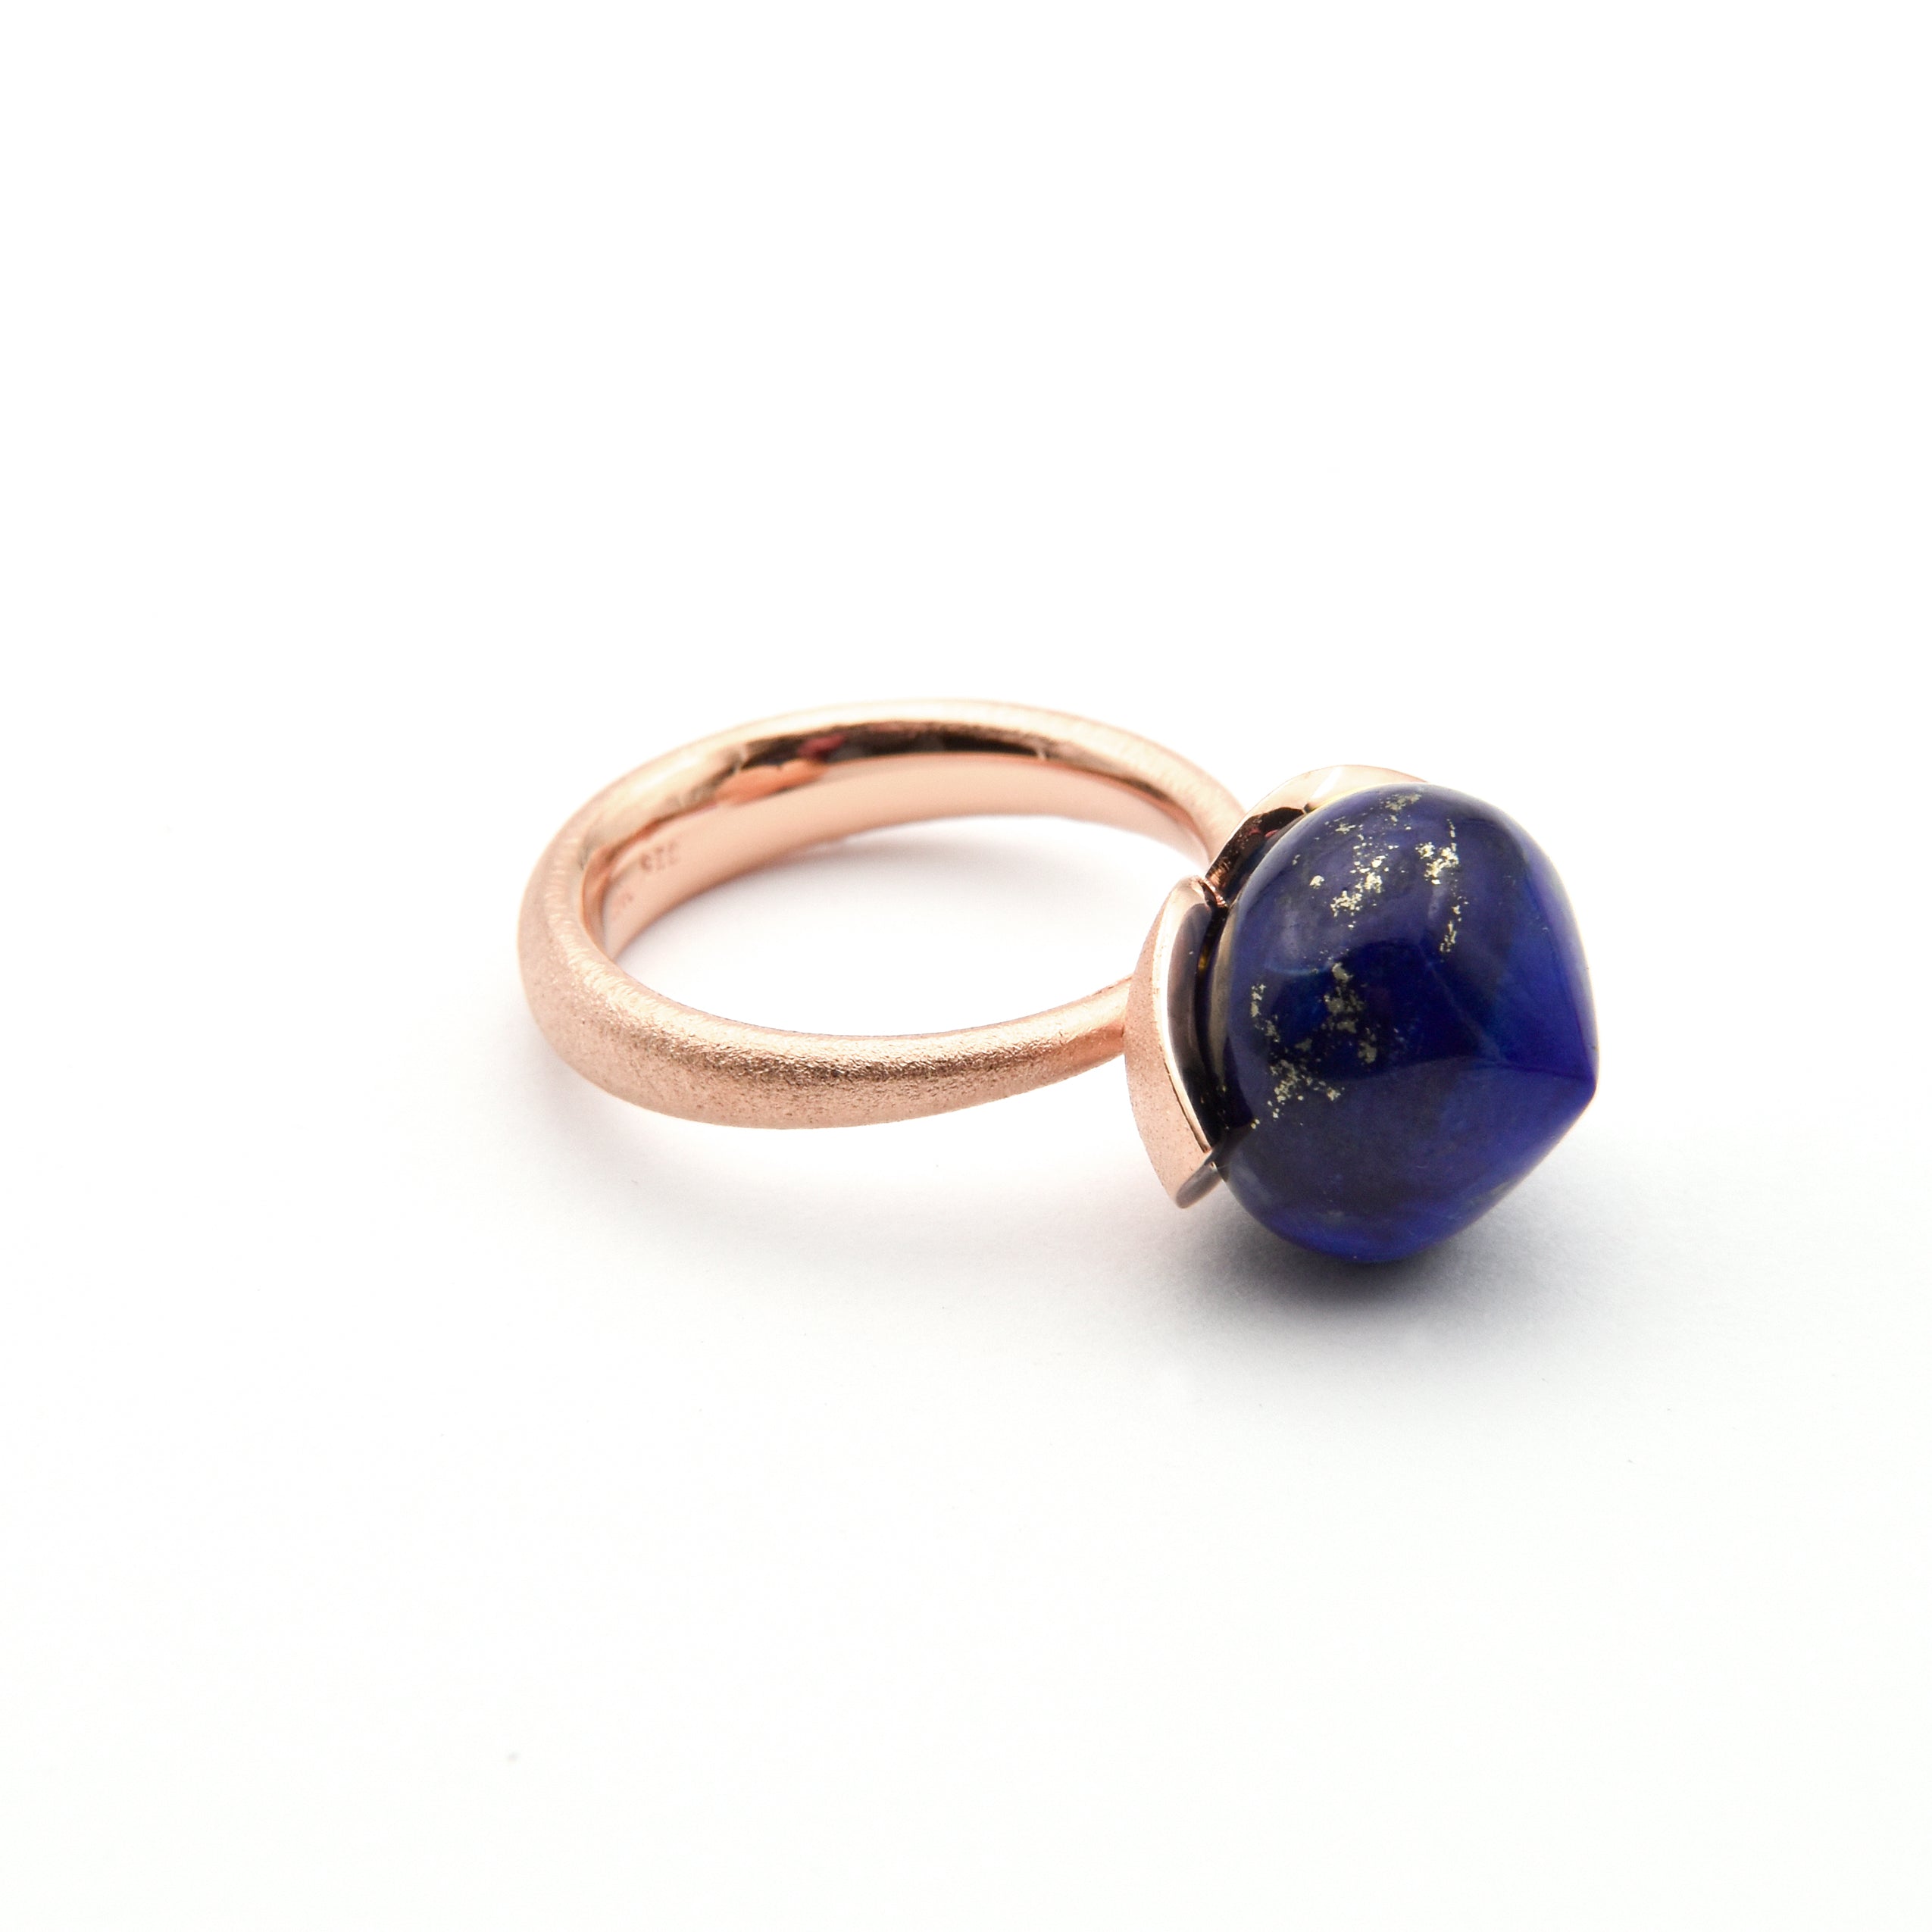 Dolce ring "big" with lapis lazuli 925/-